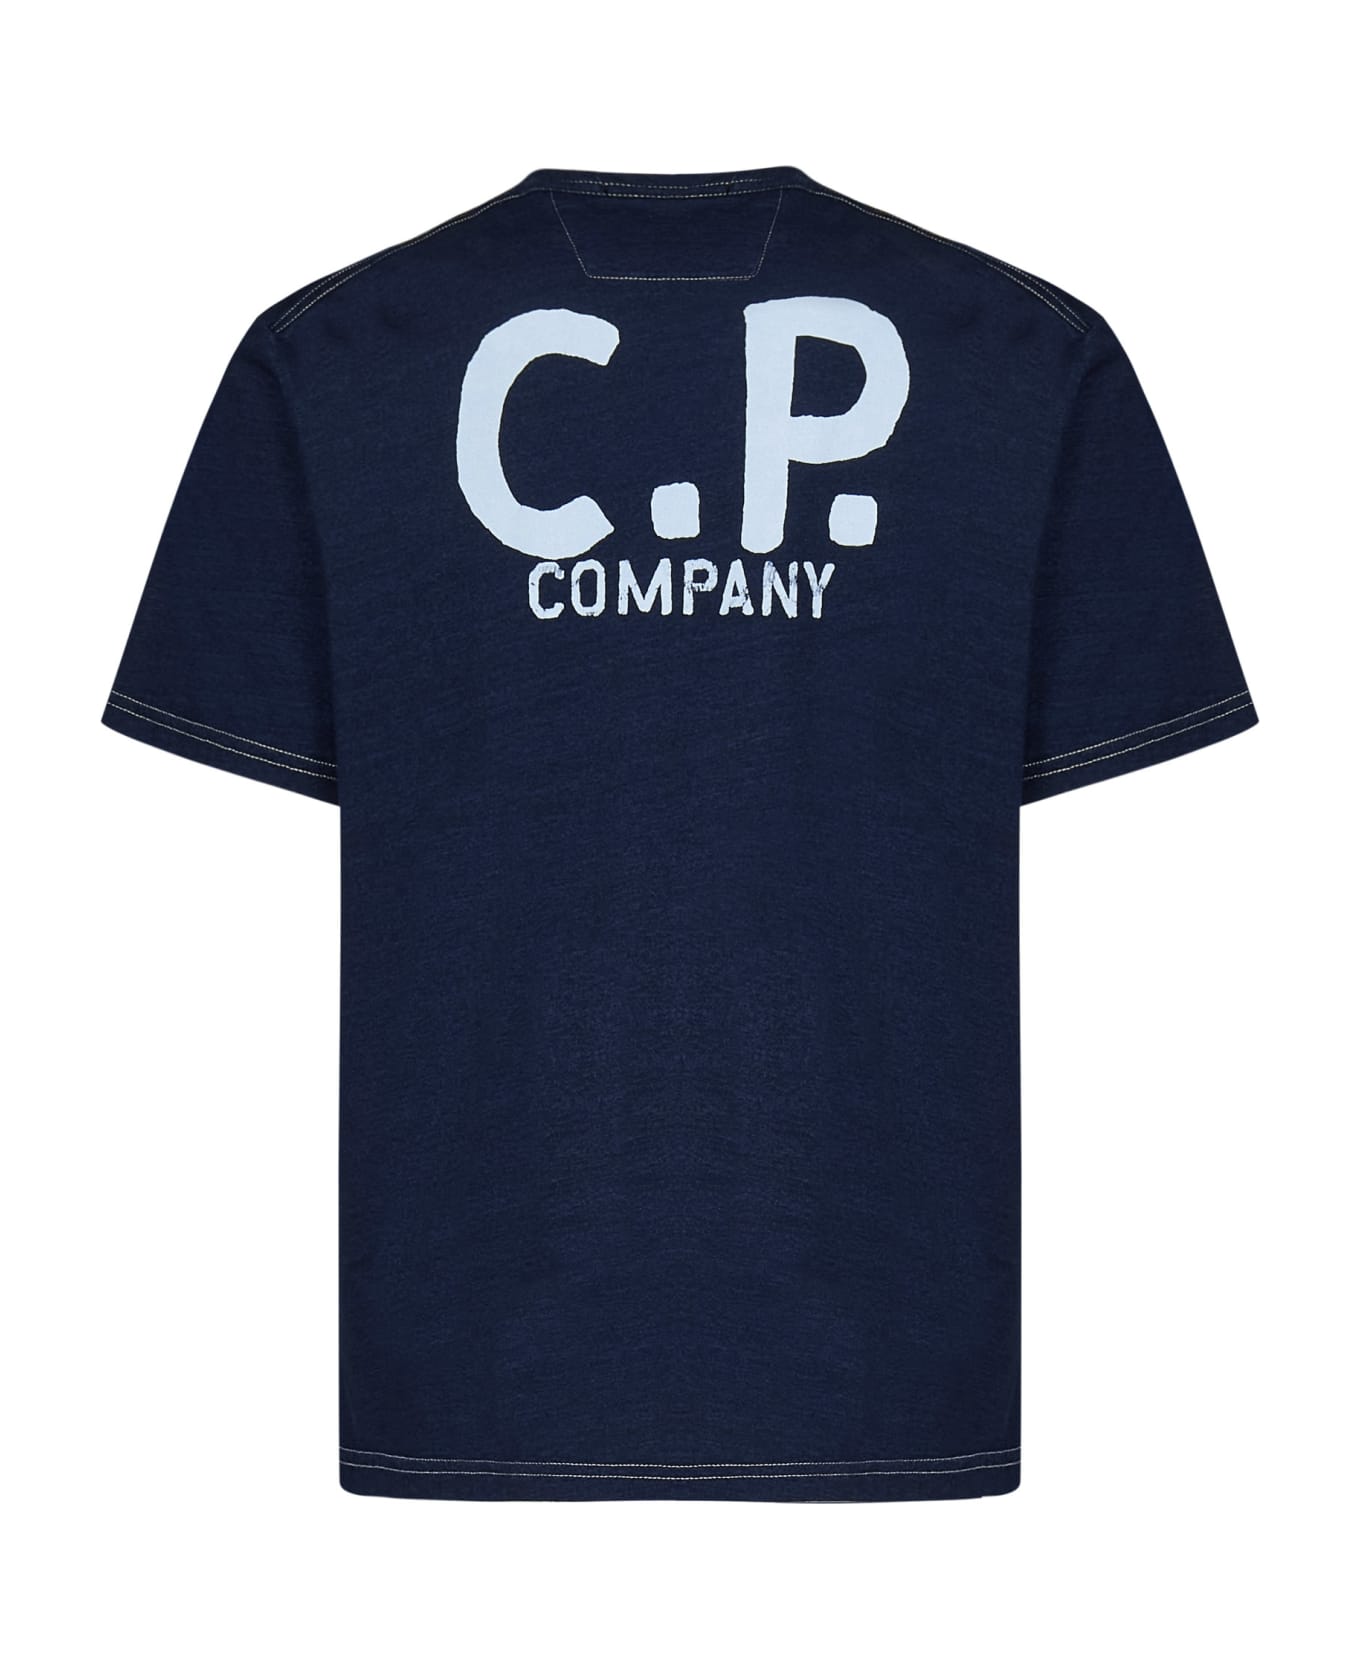 C.P. Company T-shirt - Blu